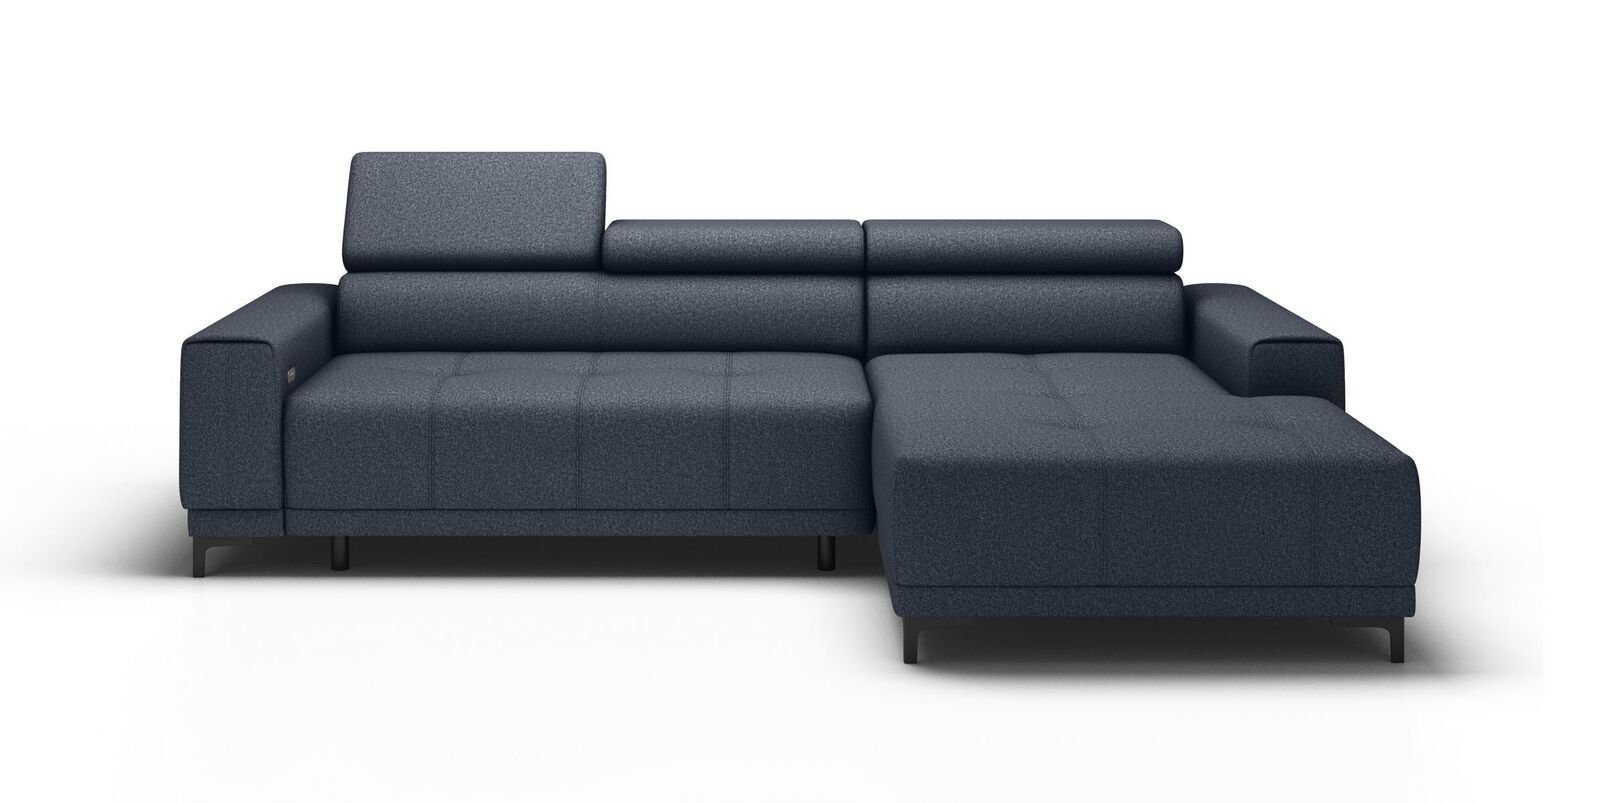 Eck Modern Ecksofa, Form JVmoebel Stoff Ecksofa Sofa Design L Sofas Couch